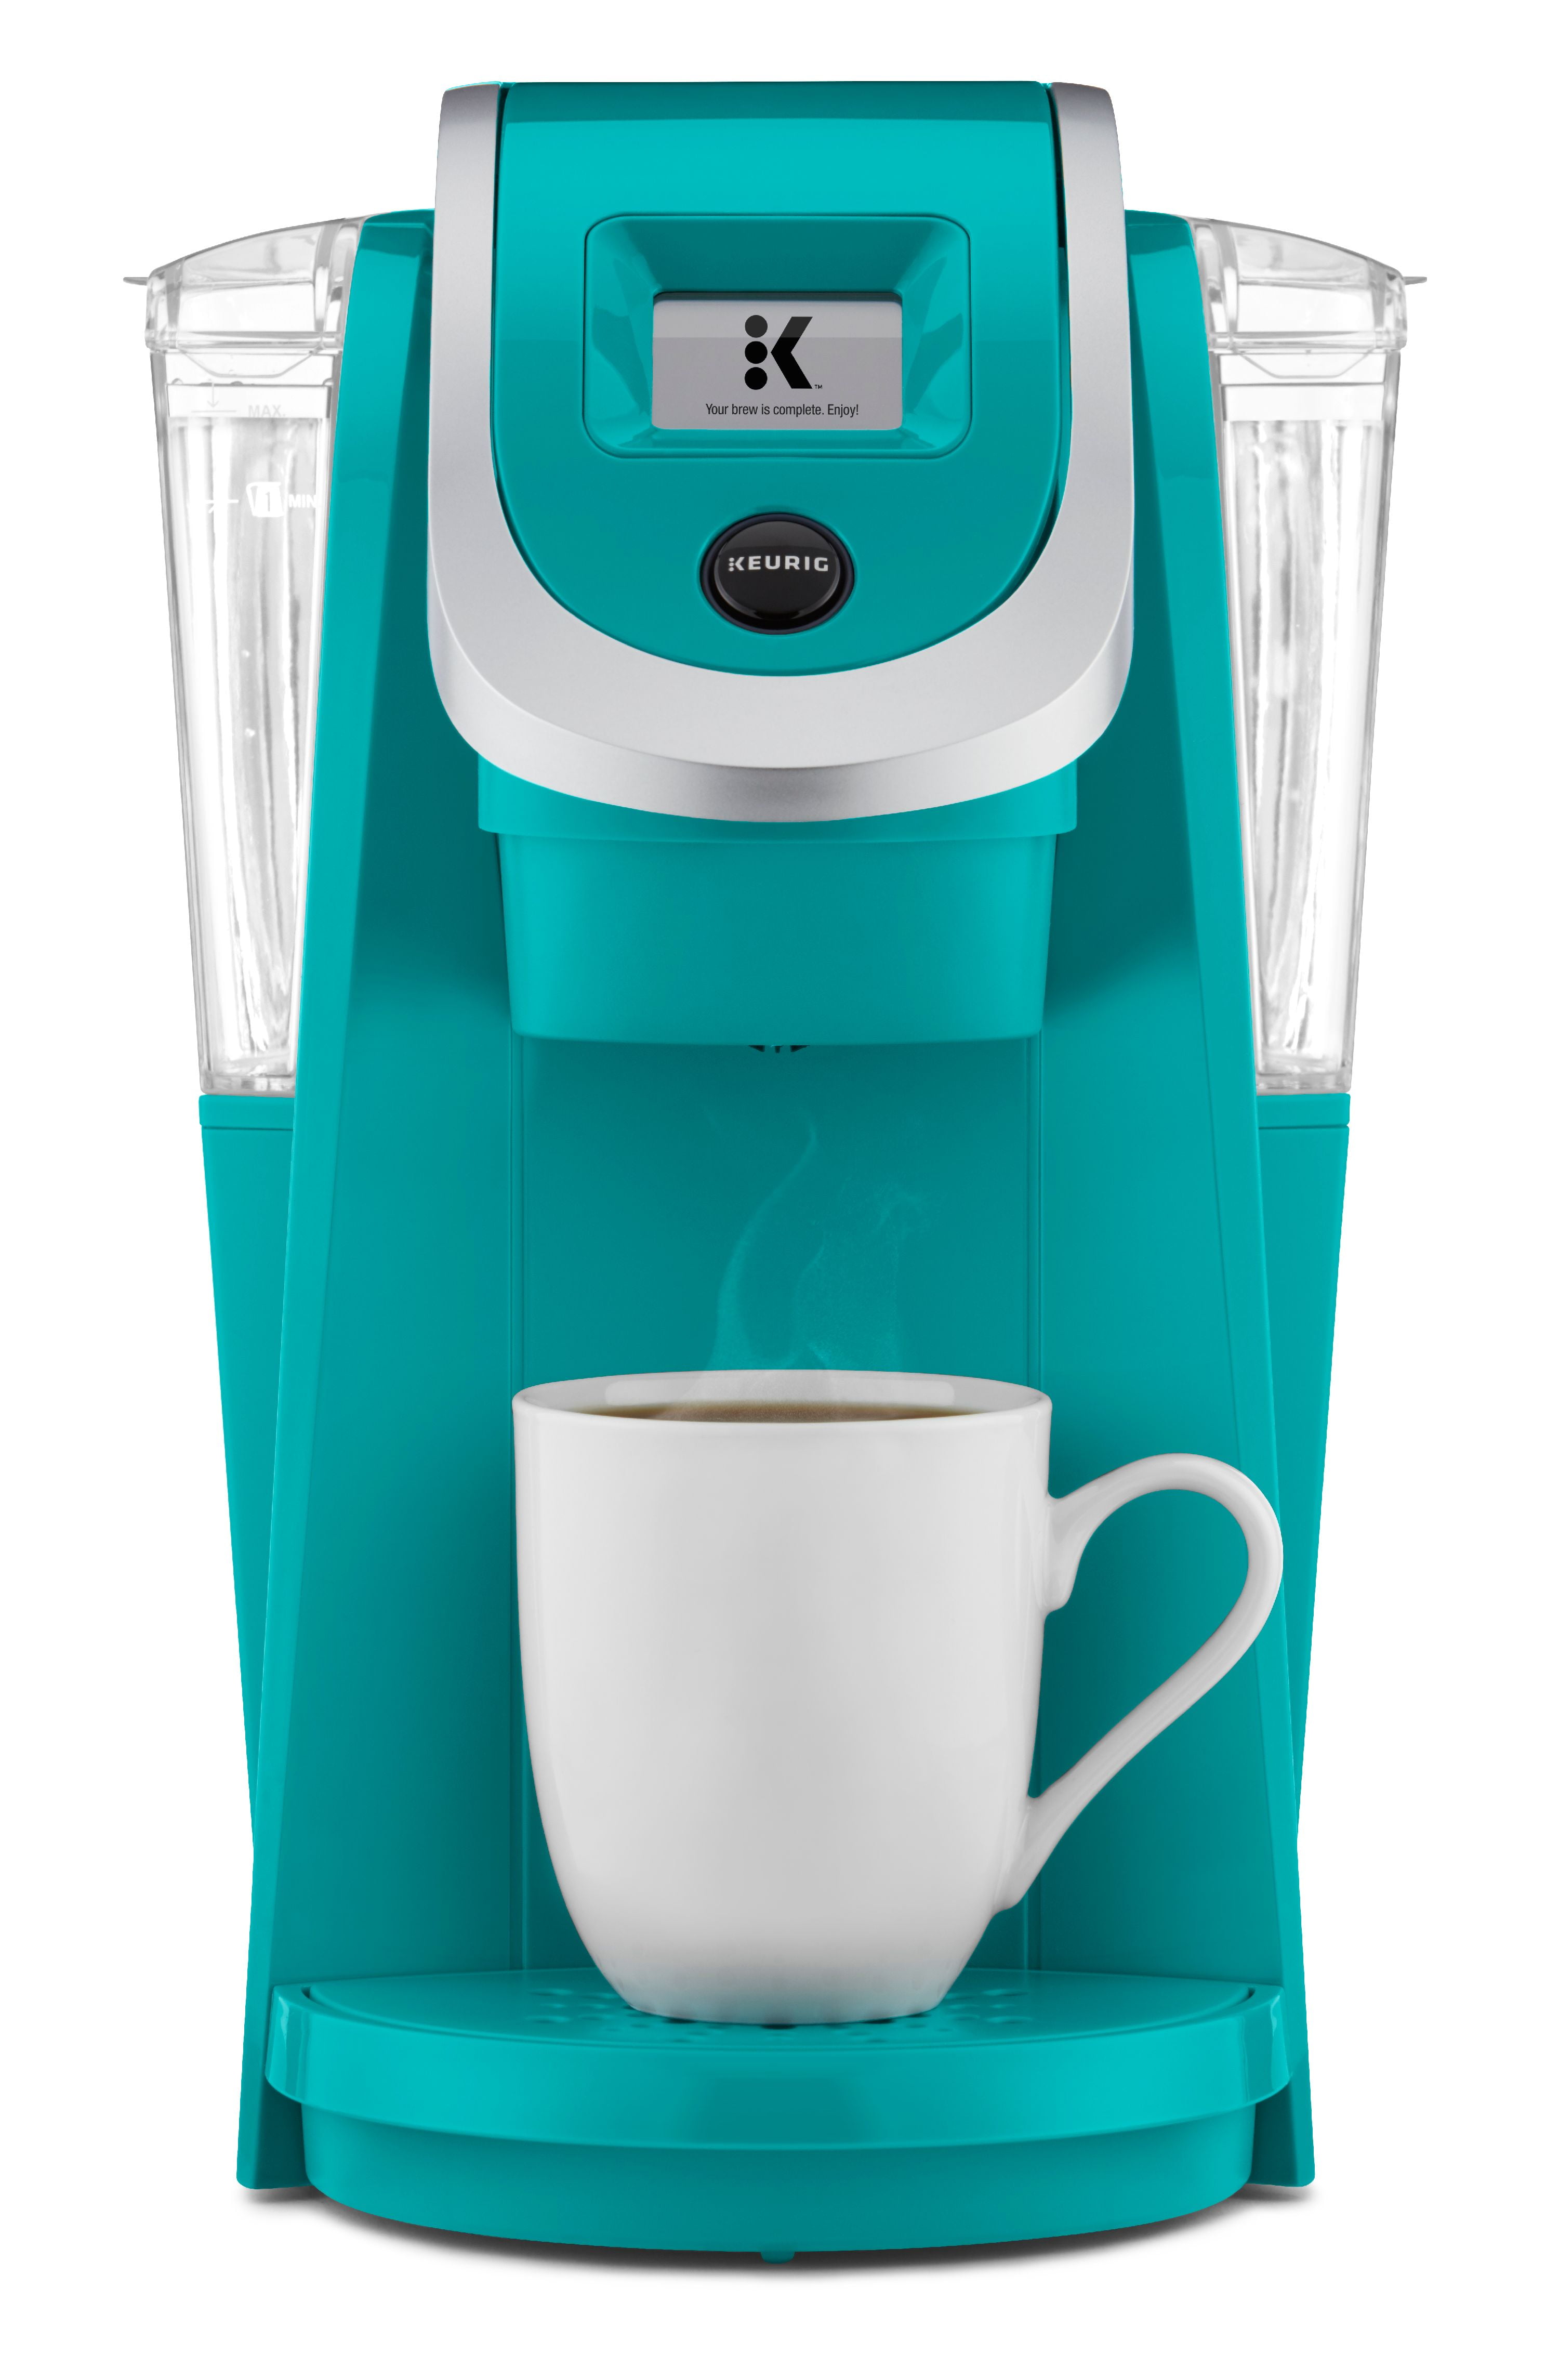 Keurig K200 review: Keurig's new compact coffeemaker makes a splash in  fresh kitchen-friendly colors - CNET